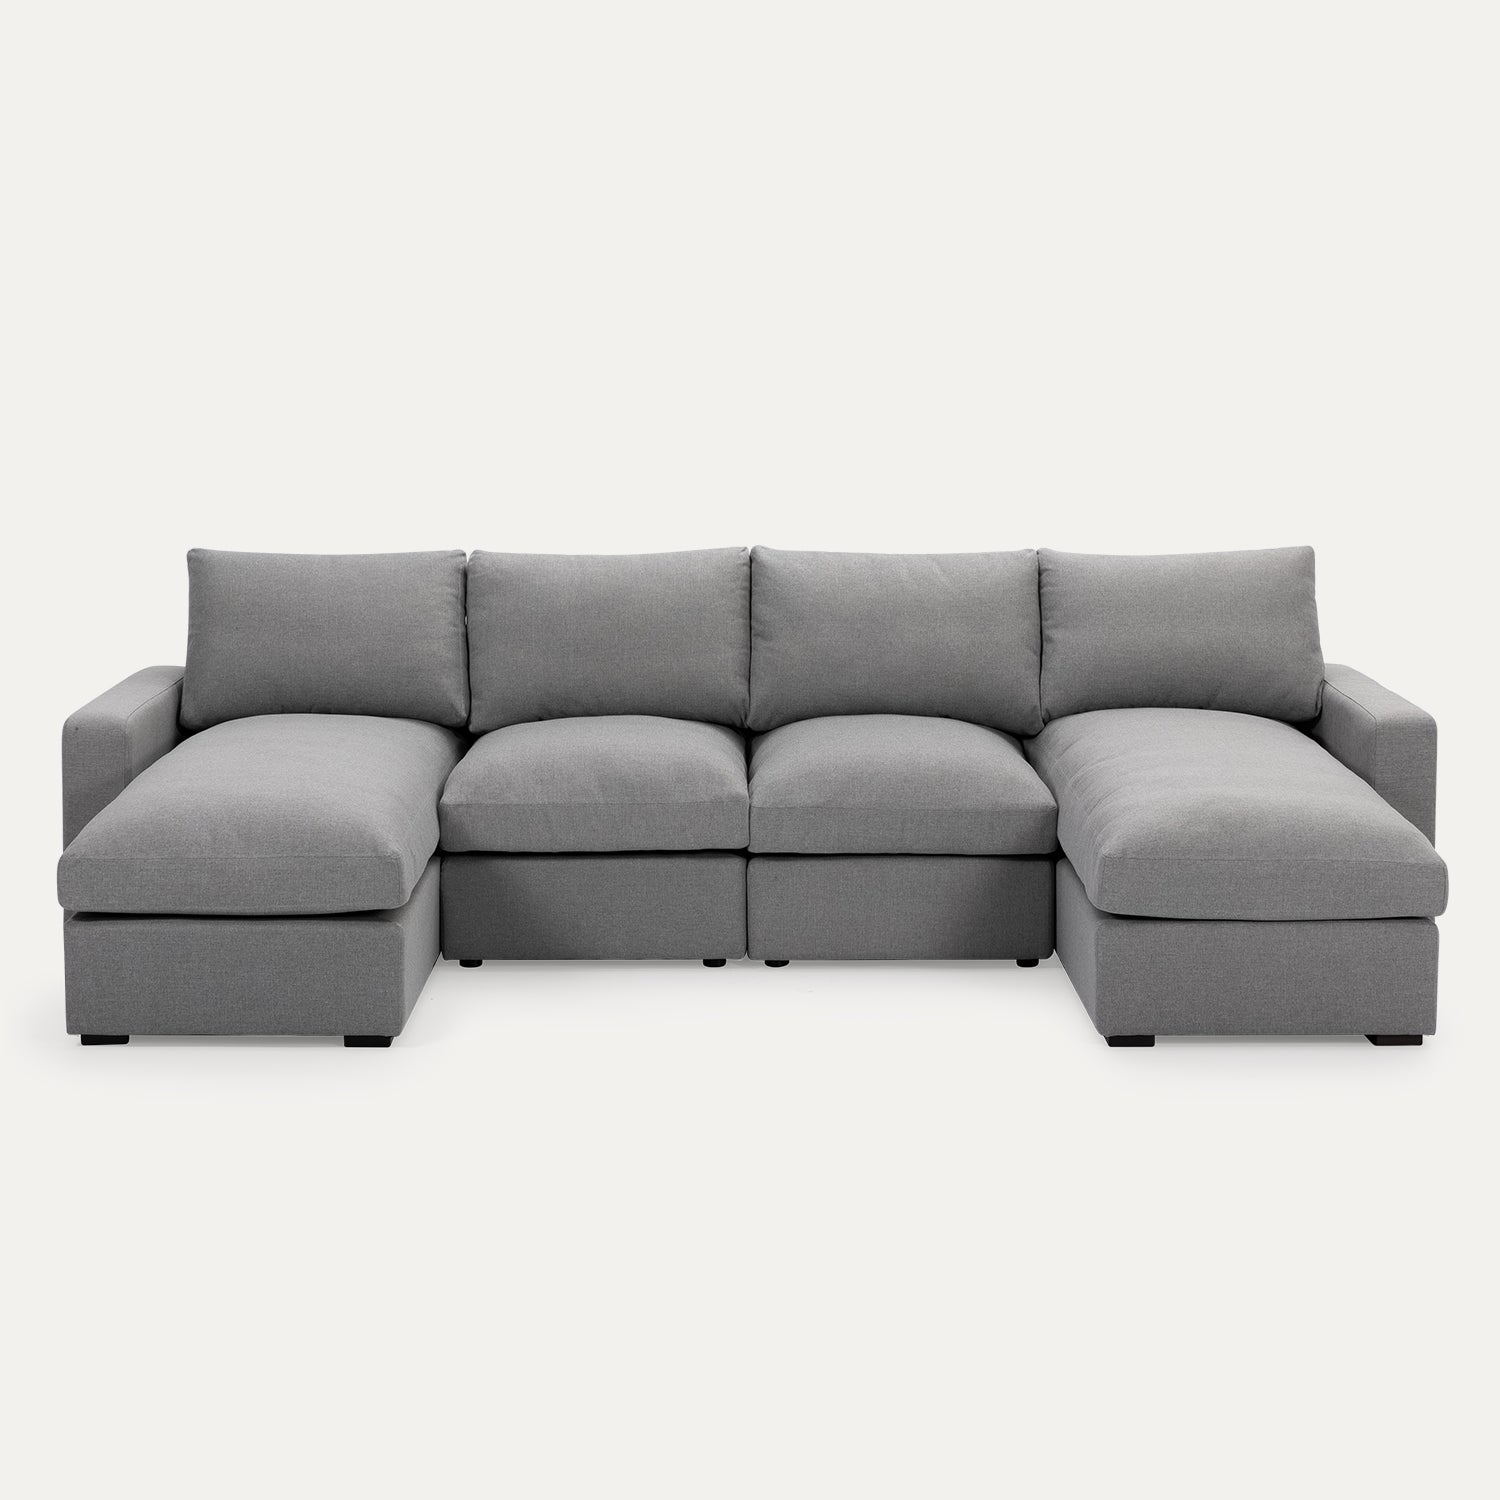 Jamison Double Chaise Sectional Sofa Dark Grey